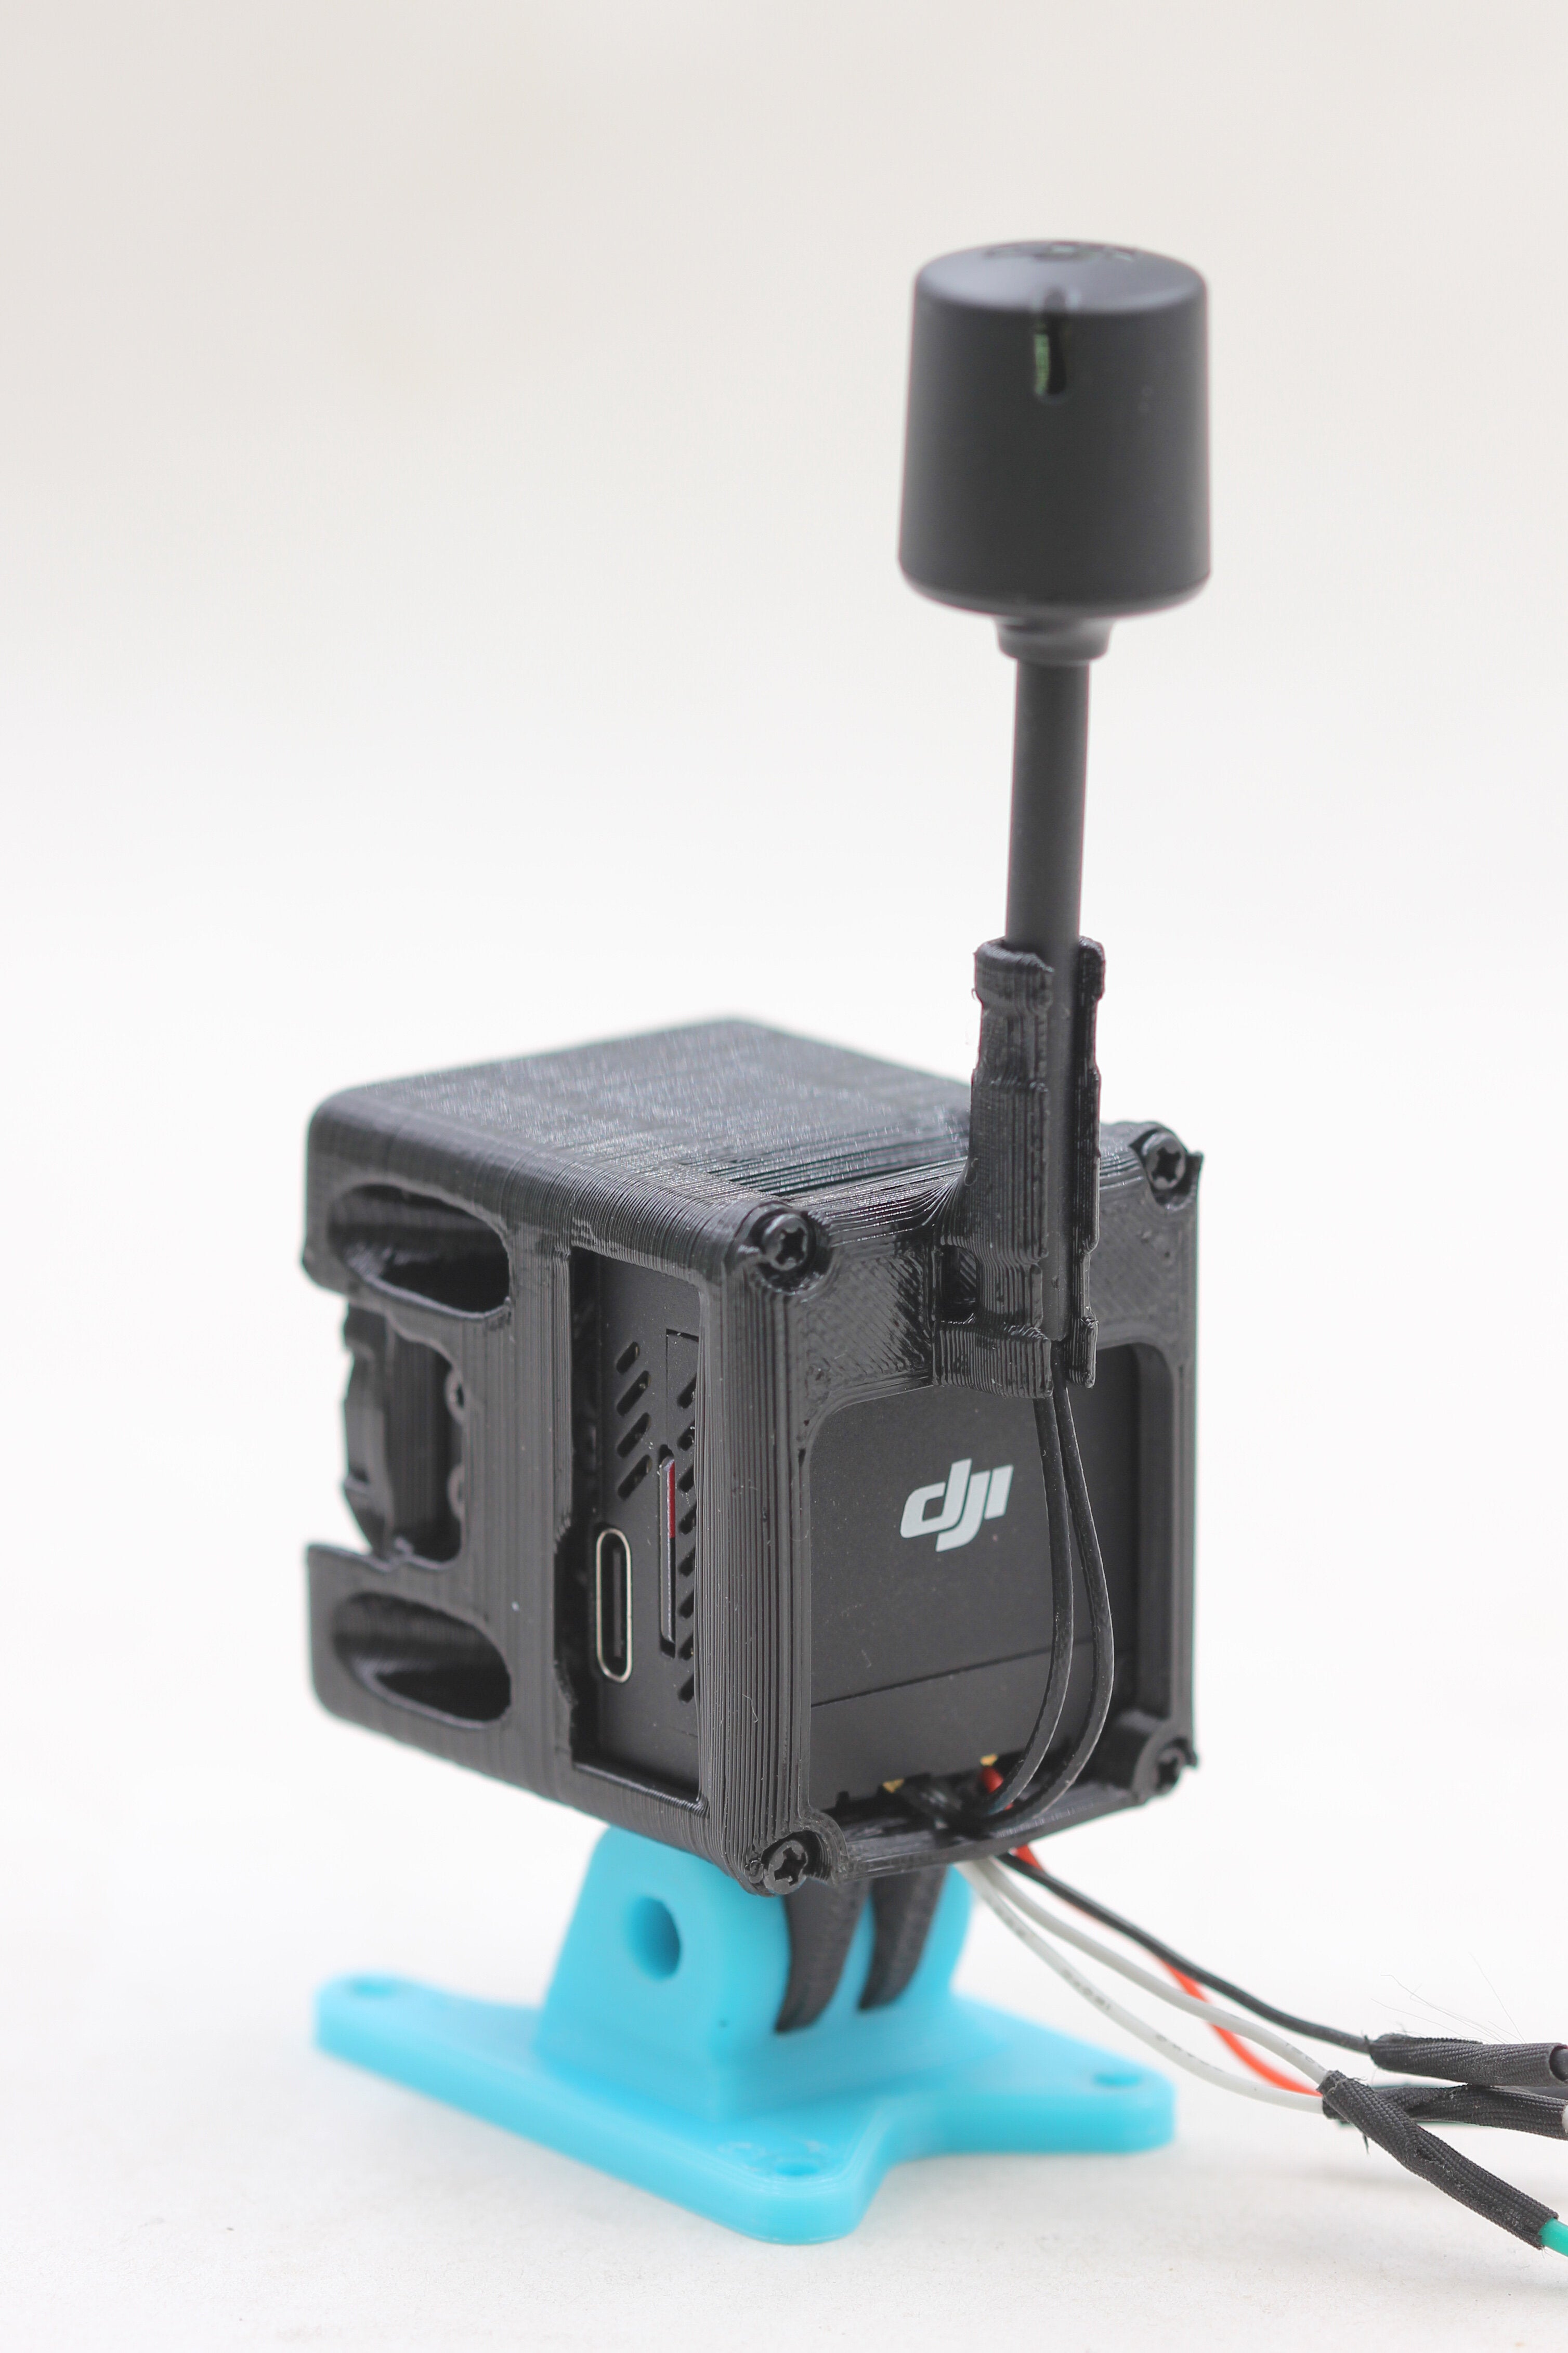 qy3d camerabevestiging voor dji o3 air unit phantom ondersteuning 3/4 filter